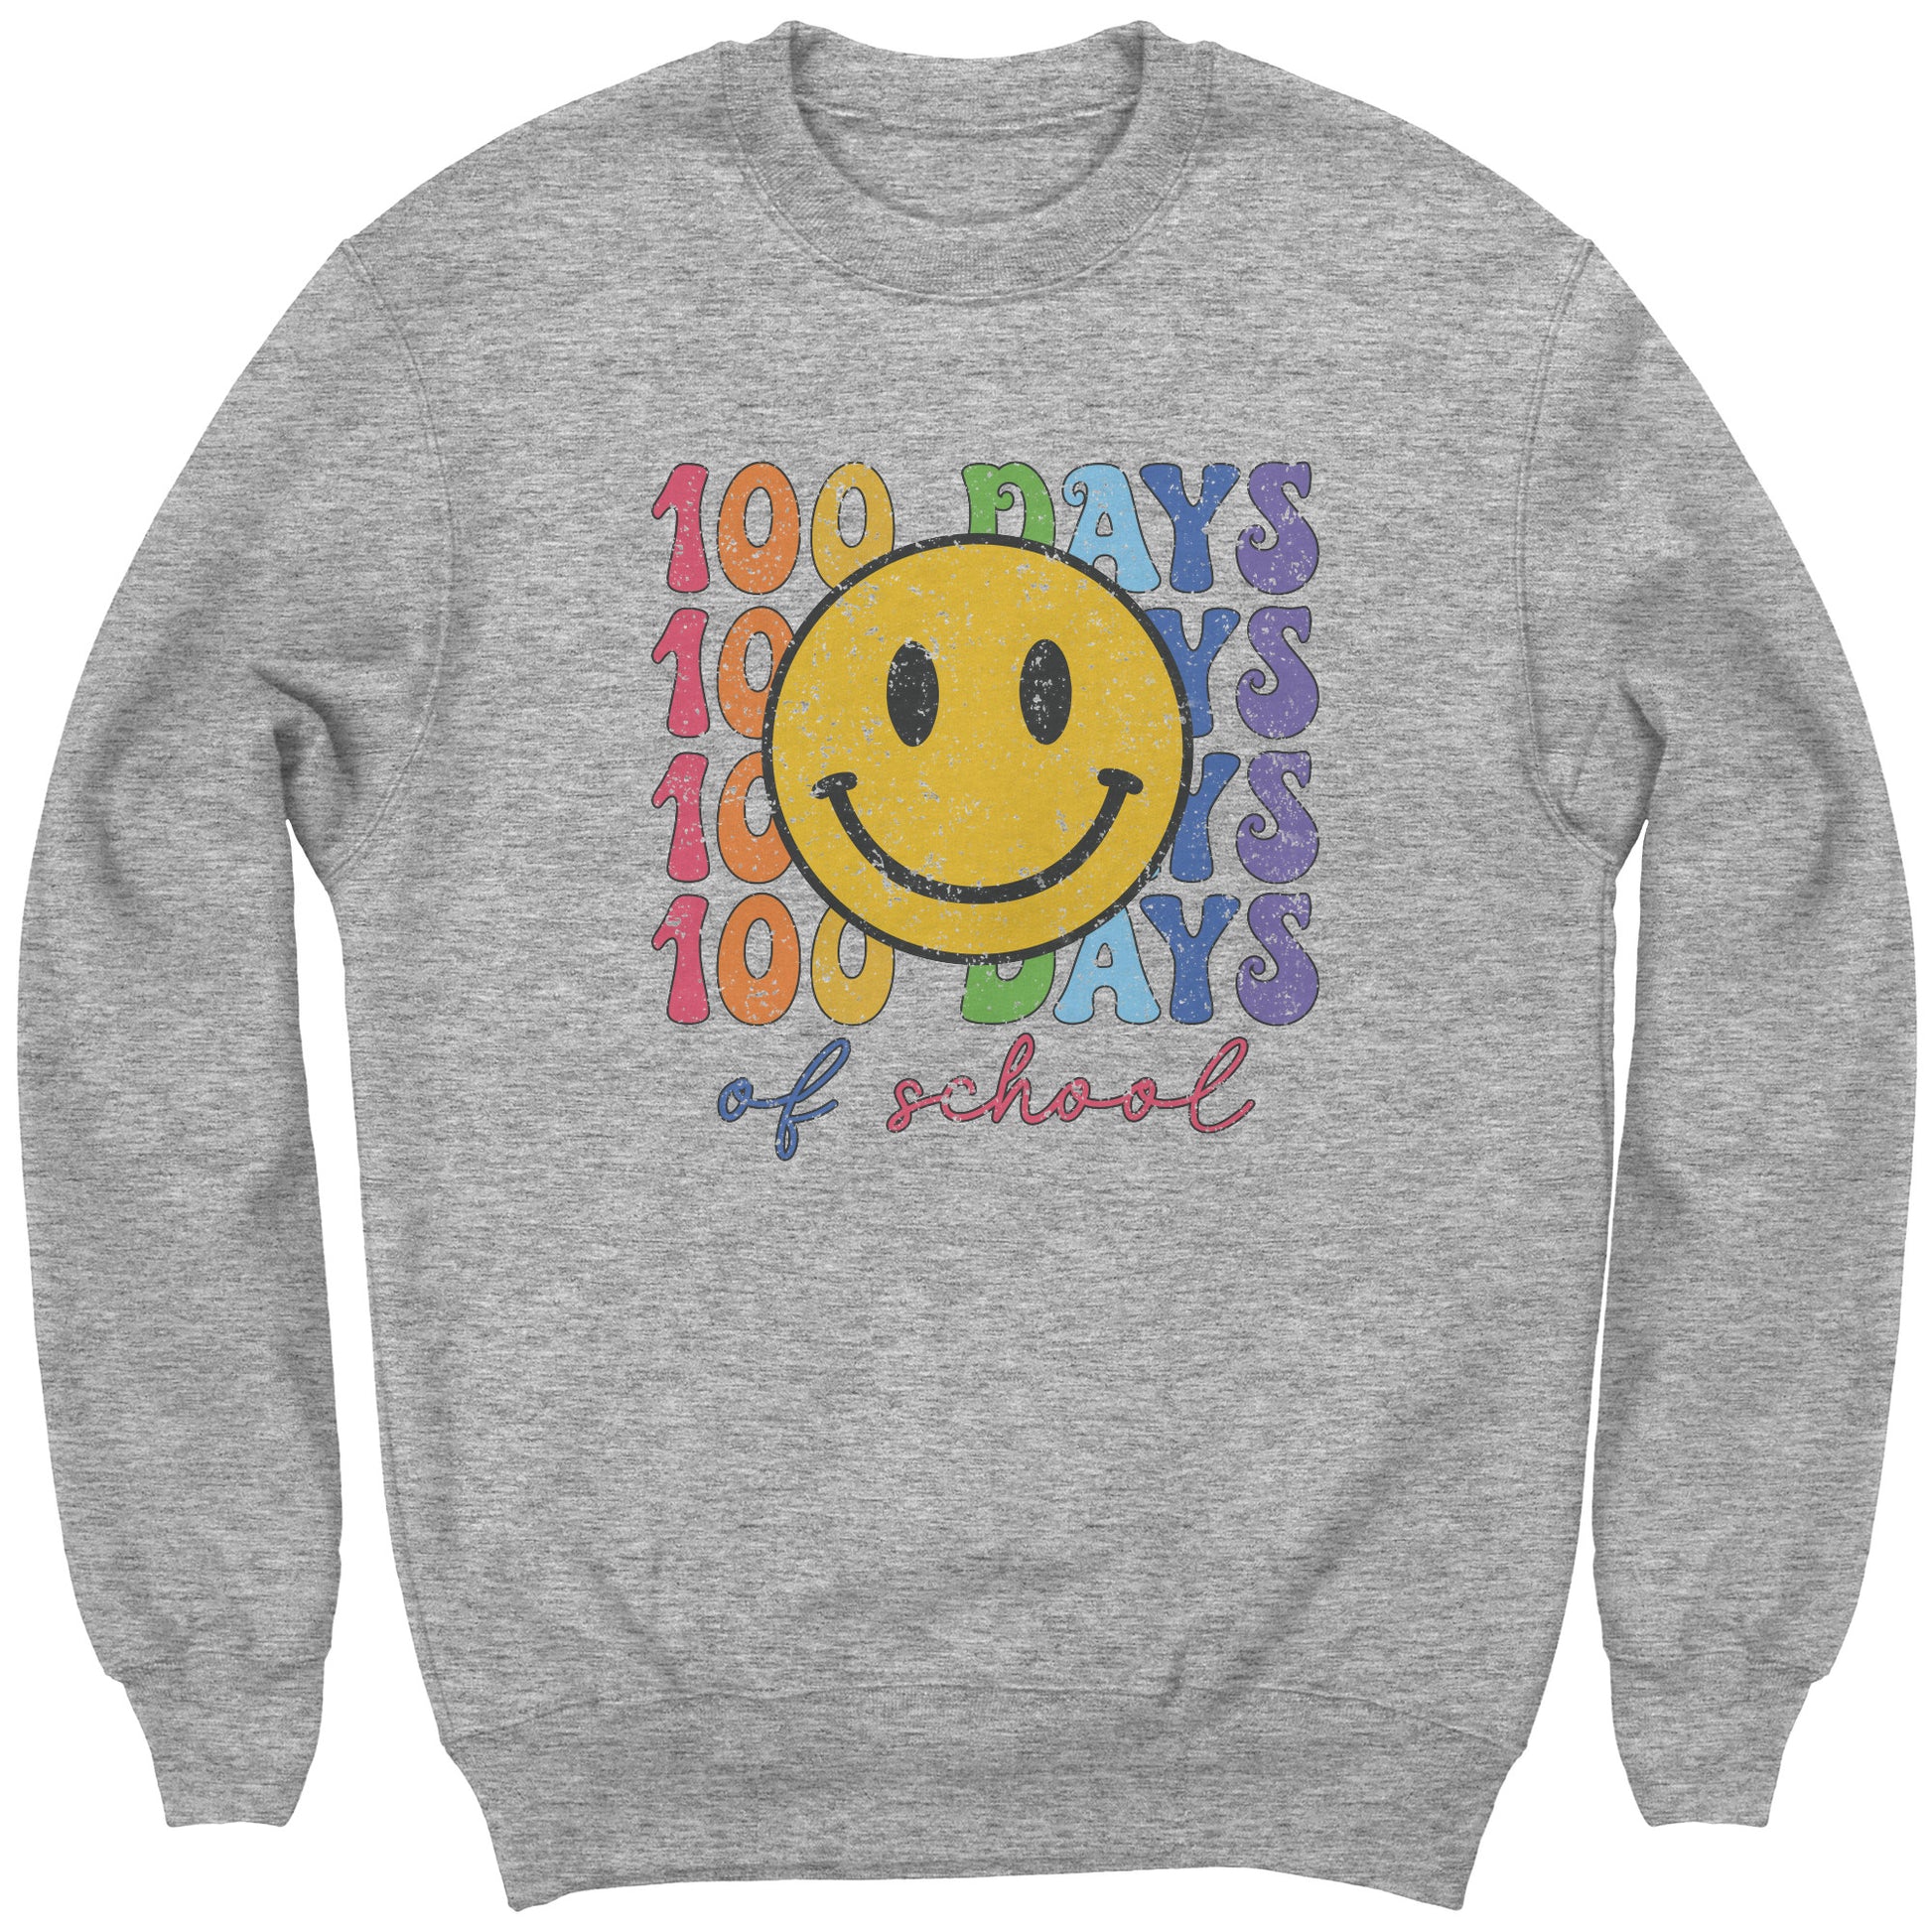 Kids 100 Days of School Sweatshirt Smile Face